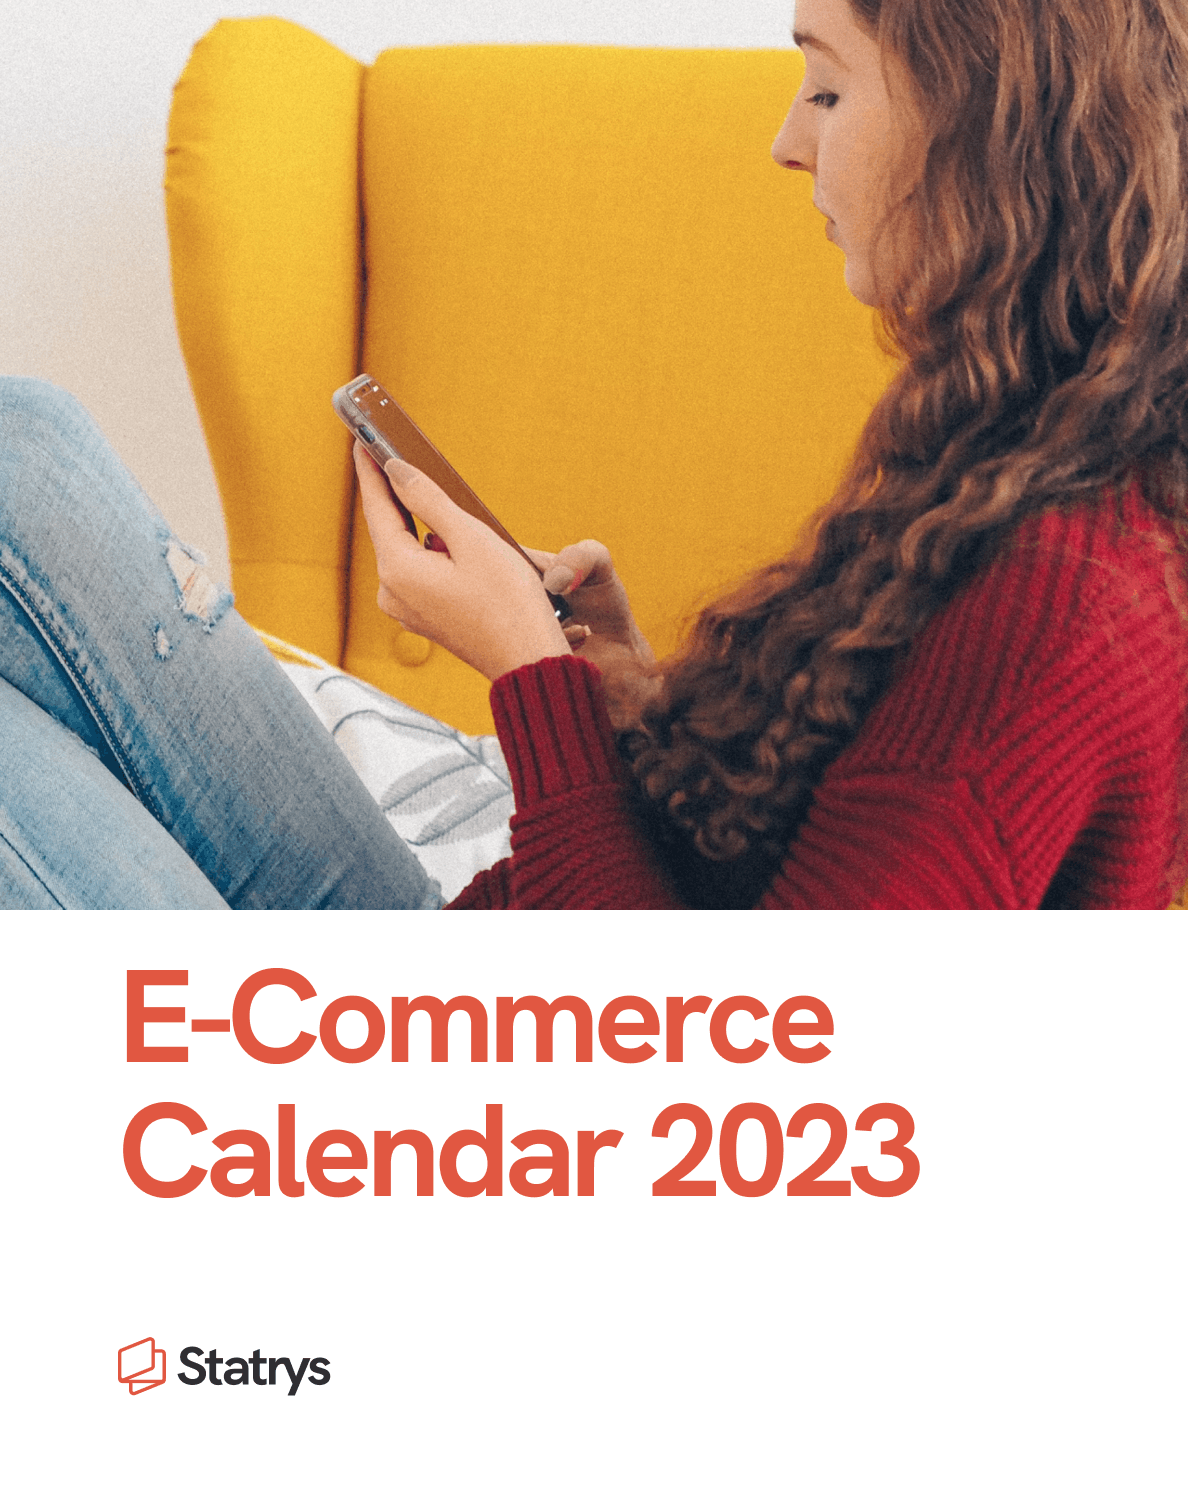 e-commerce calendar 2023